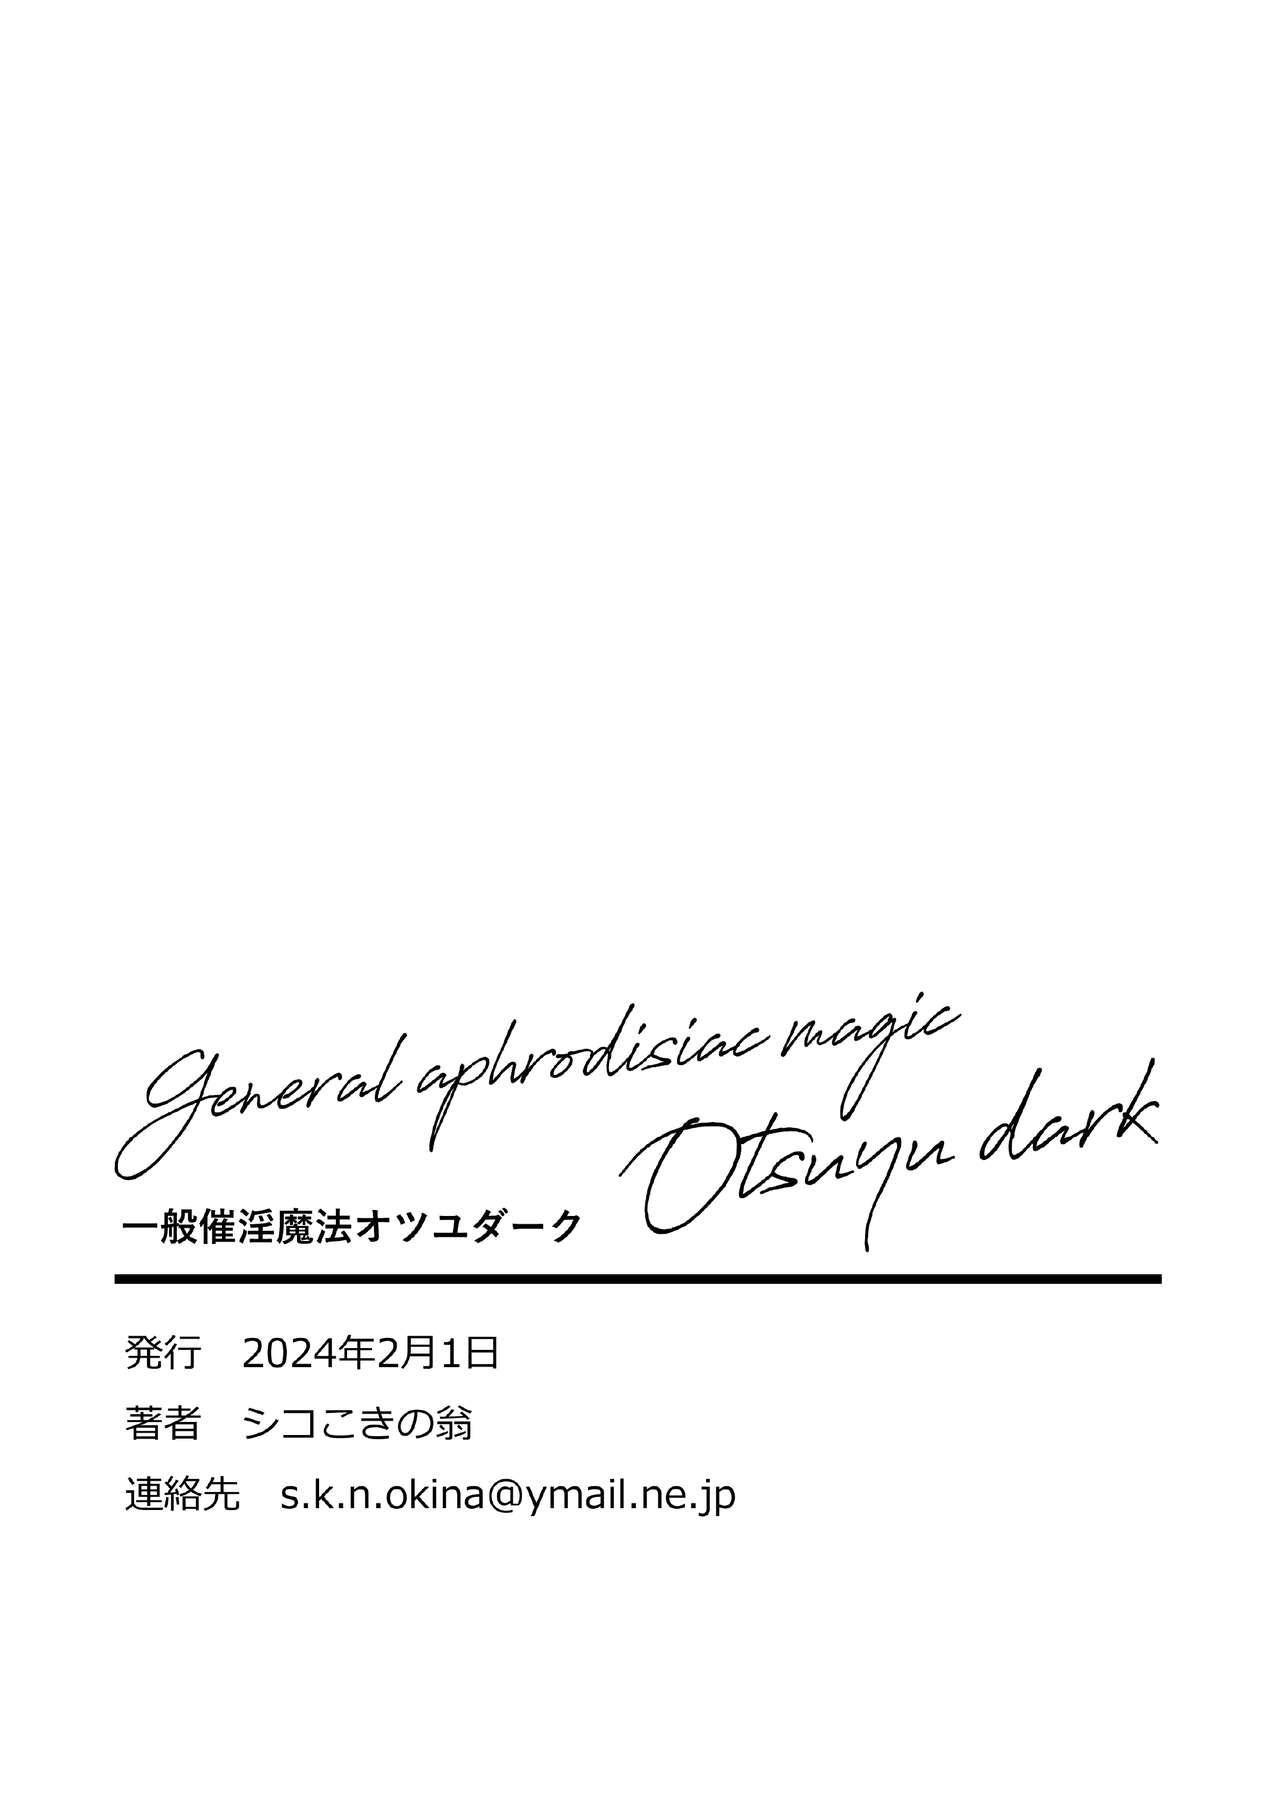 Ippan Saiin Mahou Otsuyu Dark - General aphrodisiac magic Otsuyu dark 27